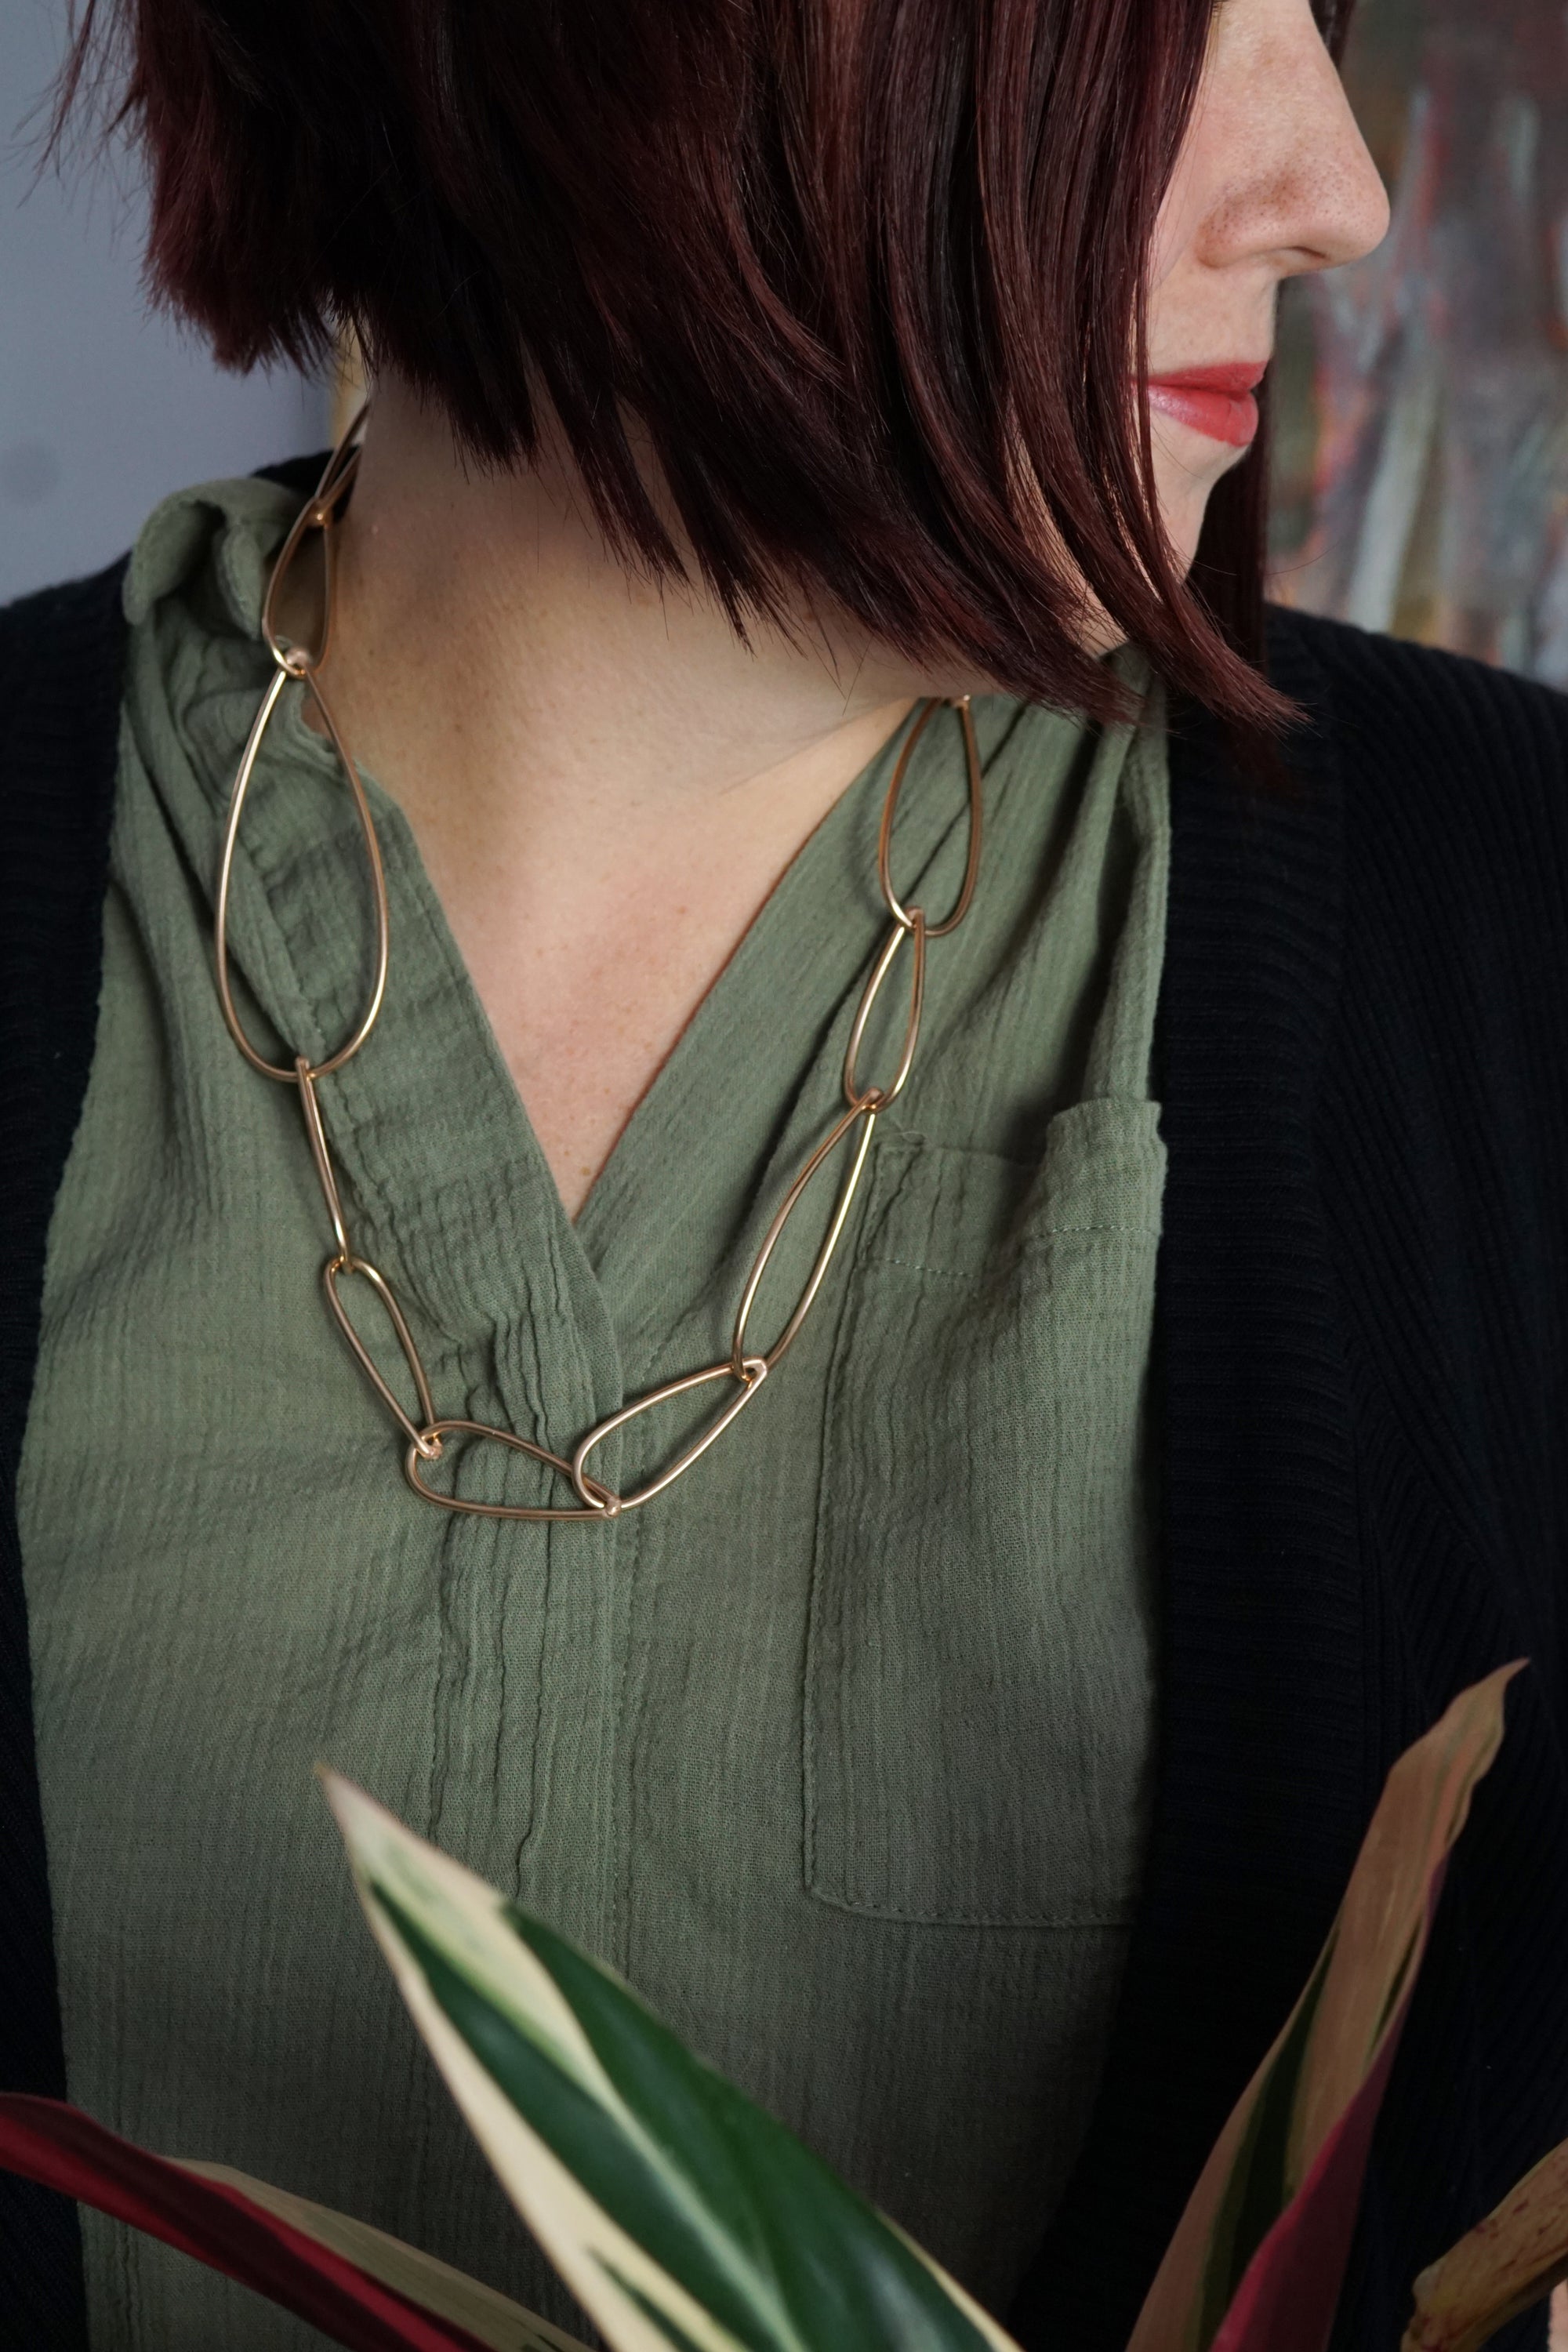 Modular Necklace No. 4 in bronze